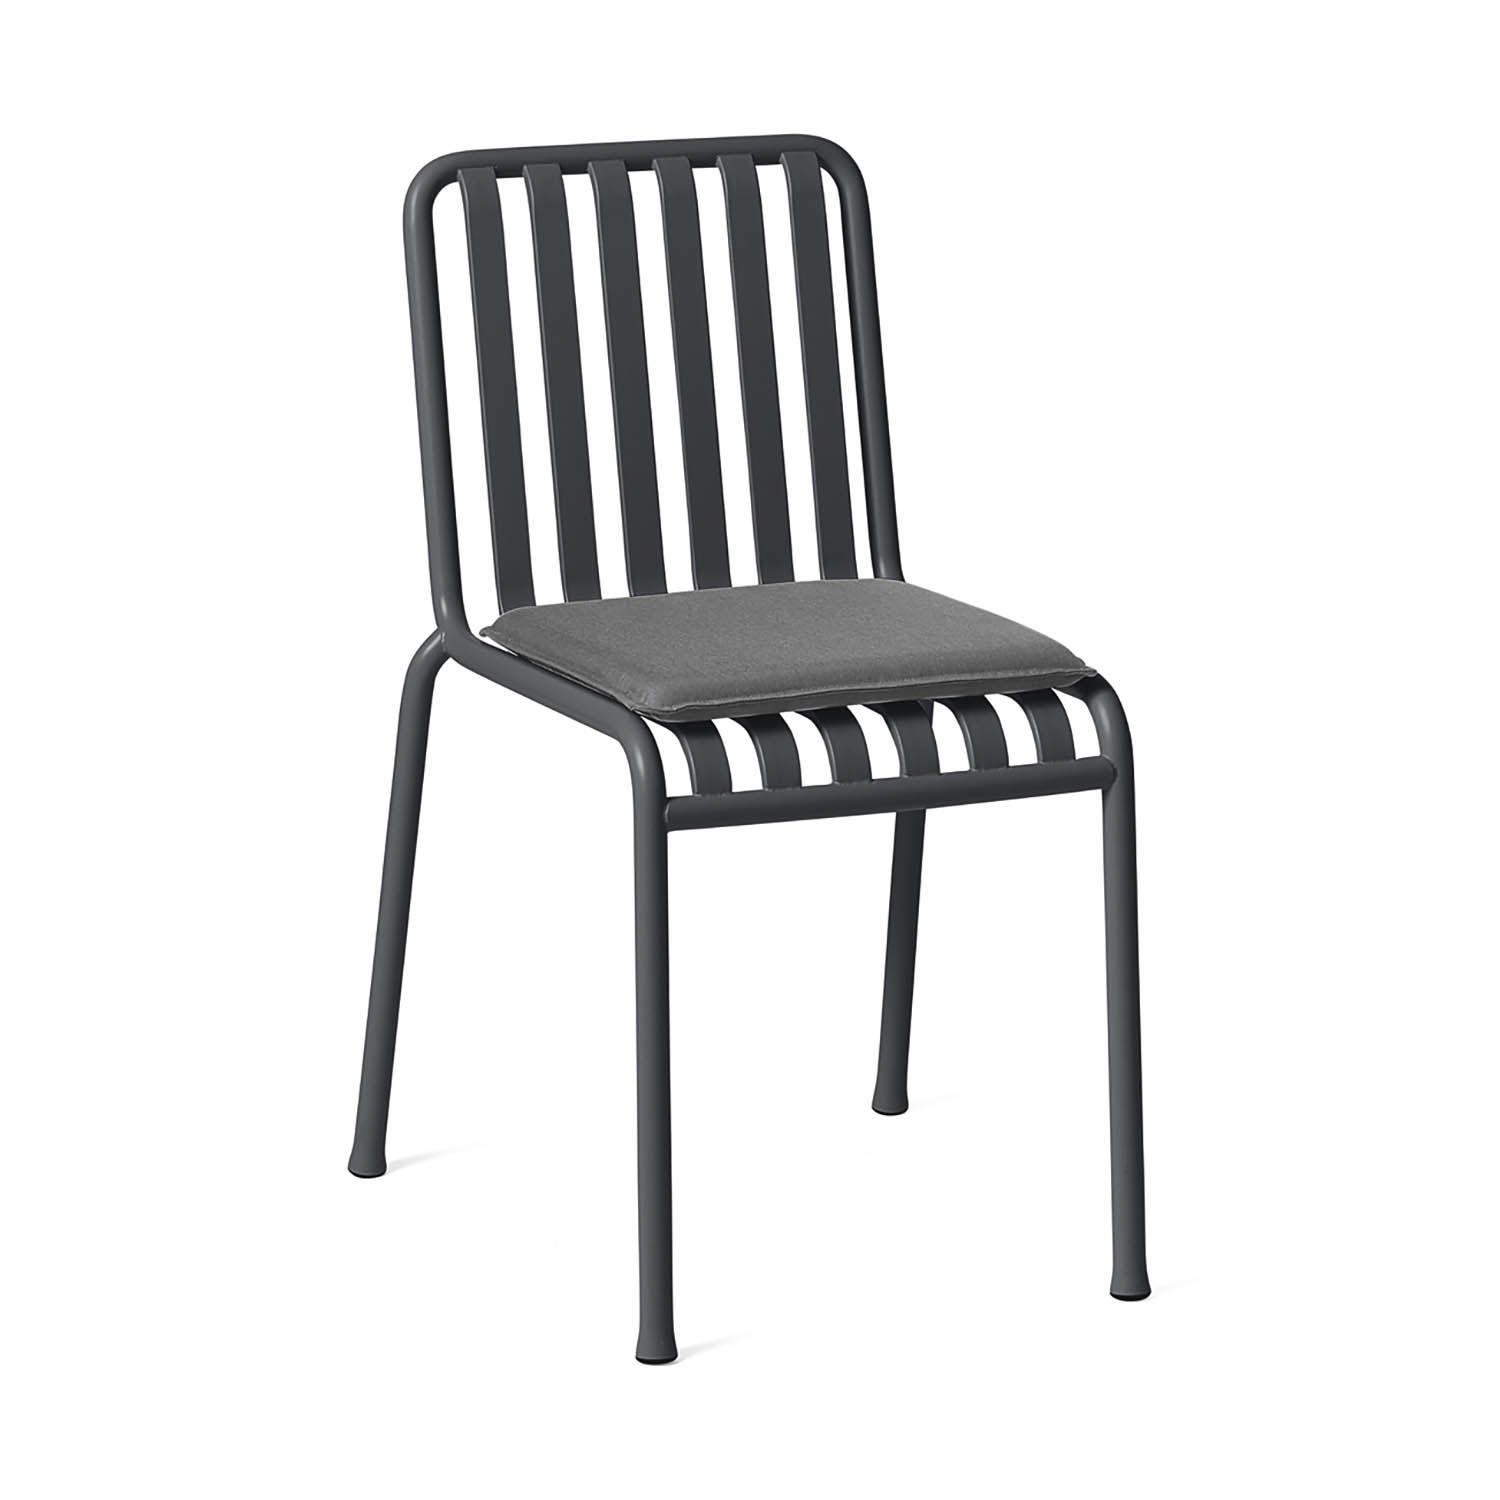 Palissade sittdyna 37x37 cm till stol antracit